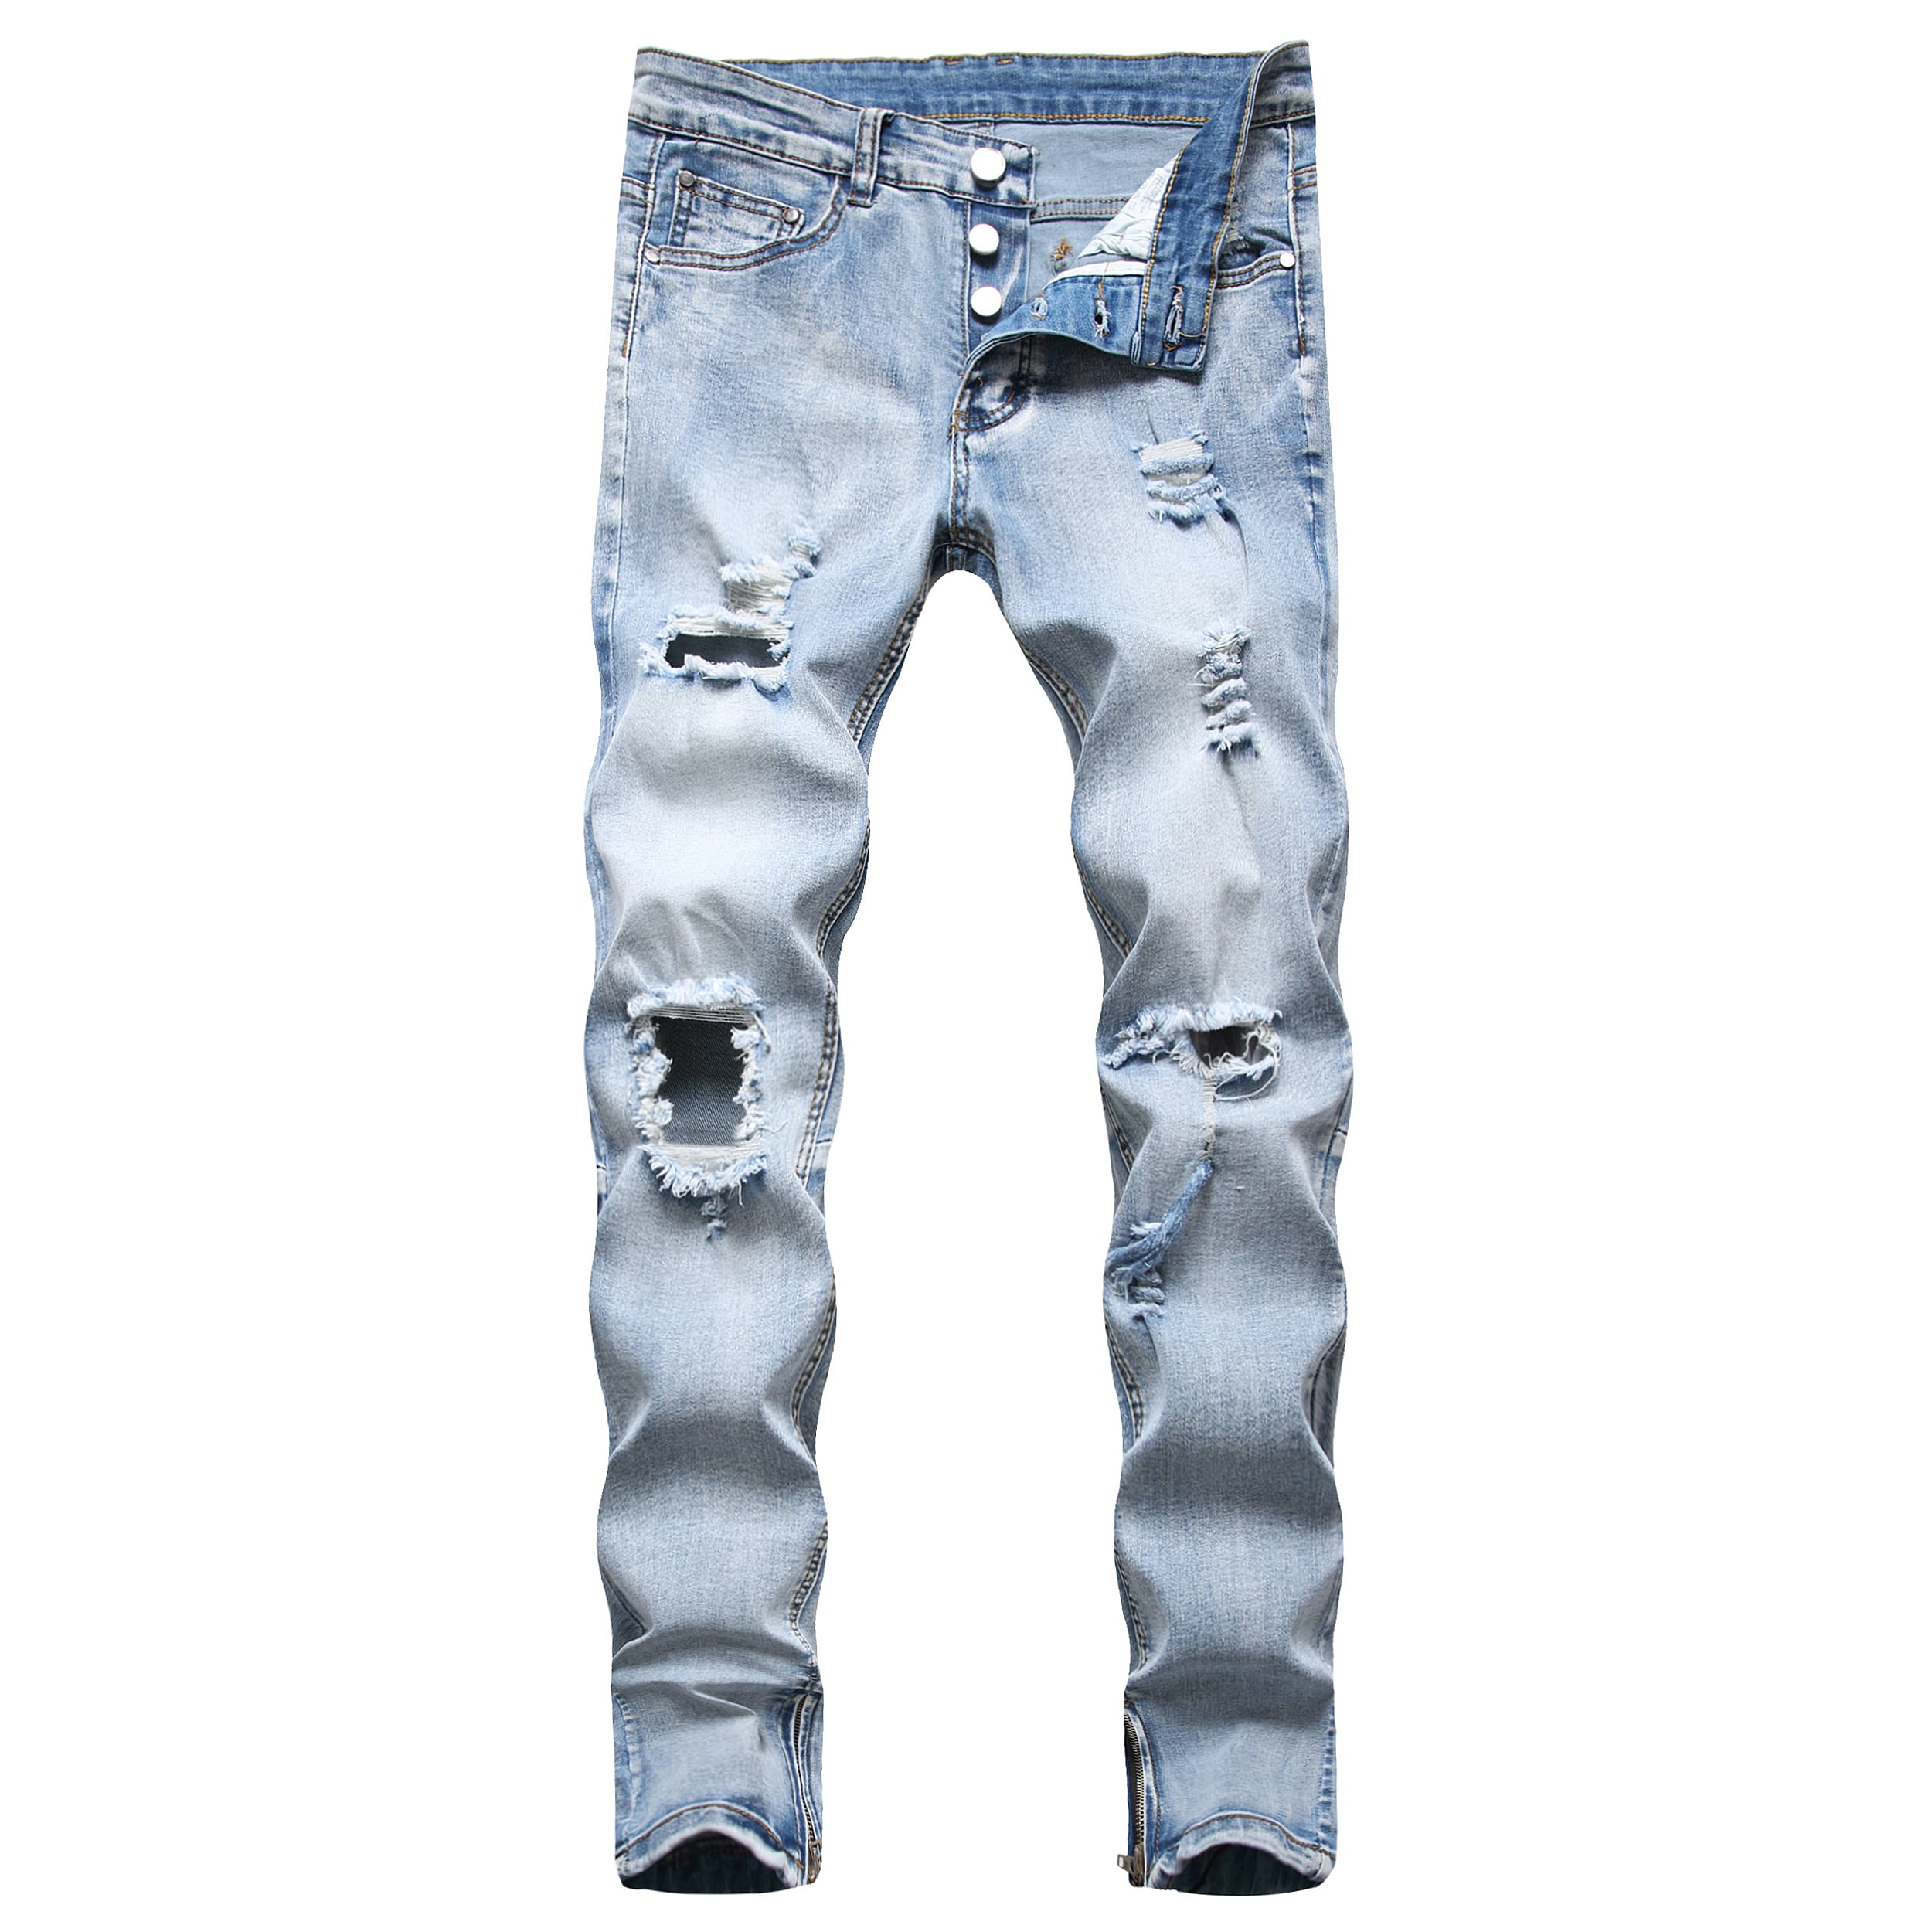 Simply Jeans New Mens Bootcut Wide Leg Flare Designer Branded Blue Denim Jeans 